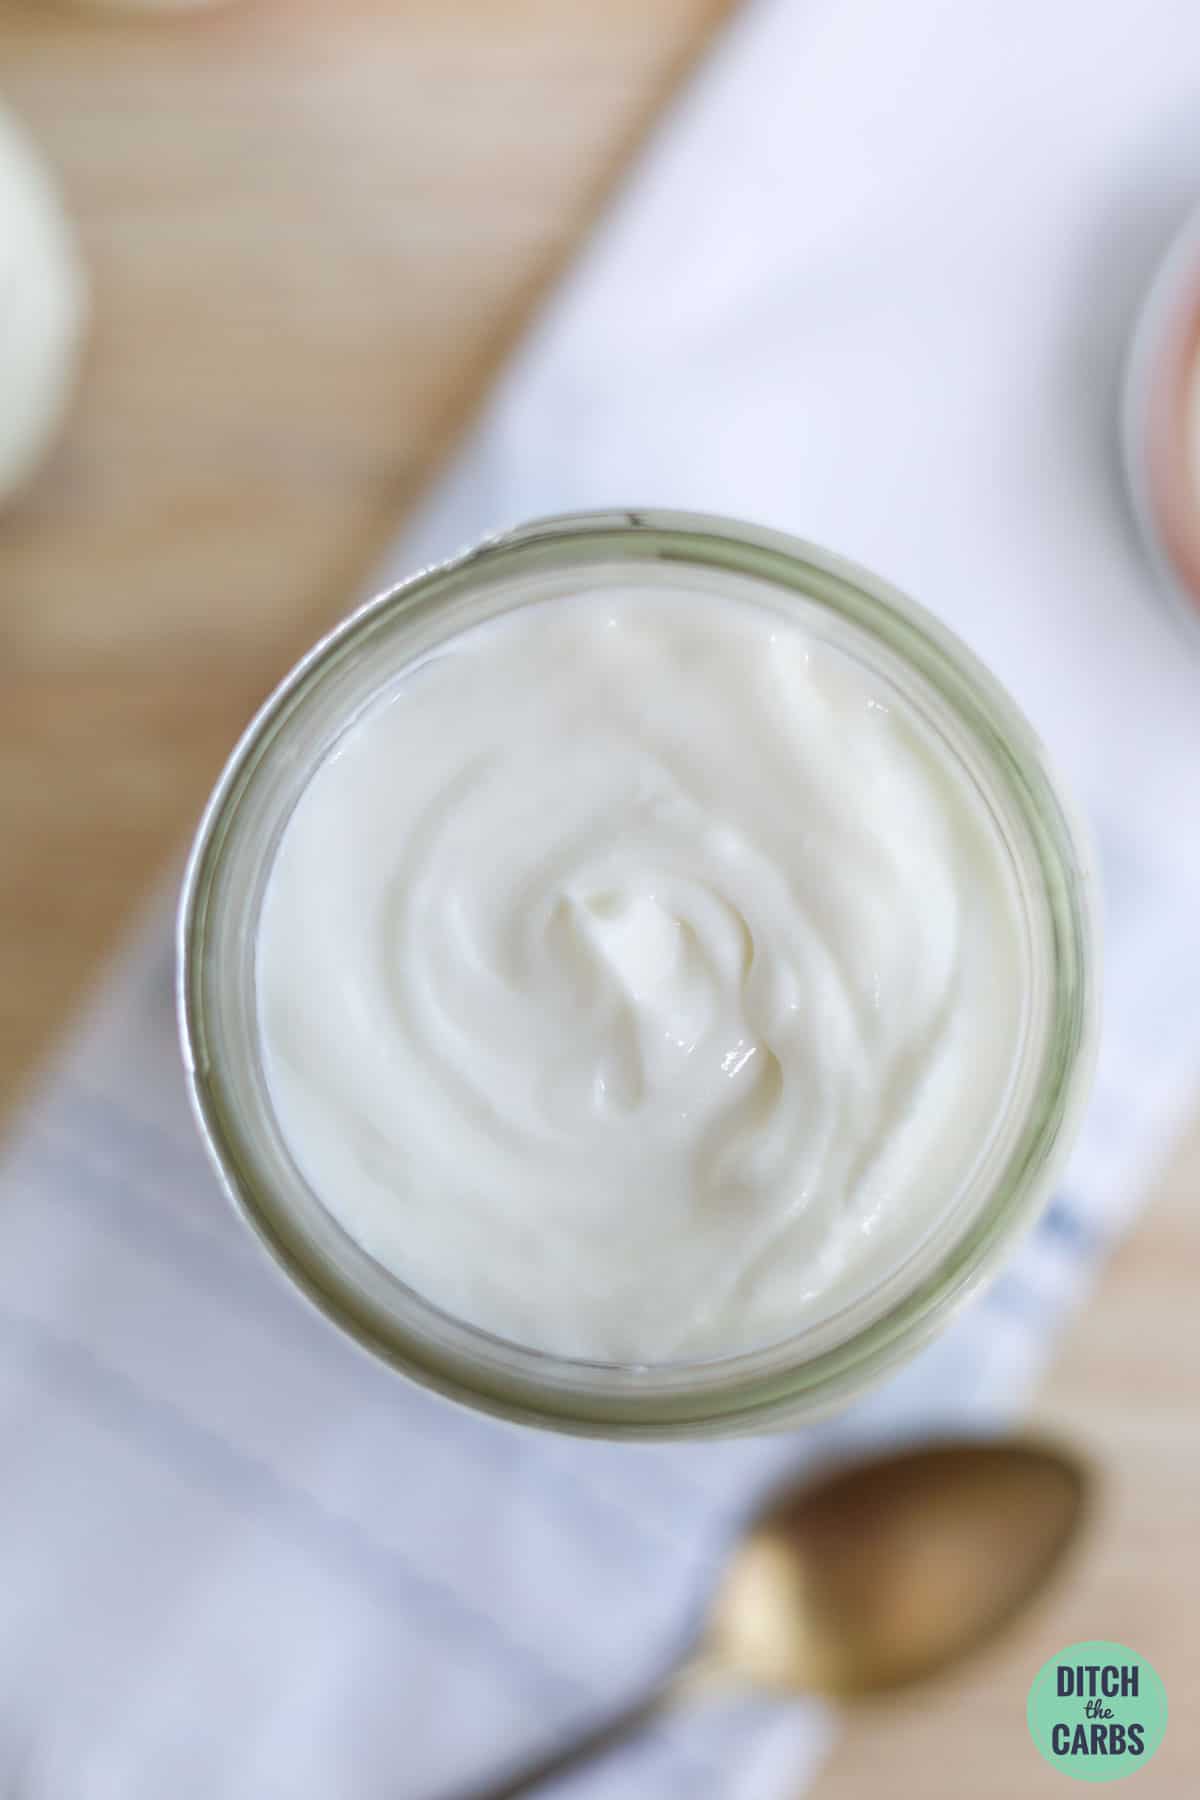 Overhead image of low-carb Greek yogurt in a glass jar resting on a towel.